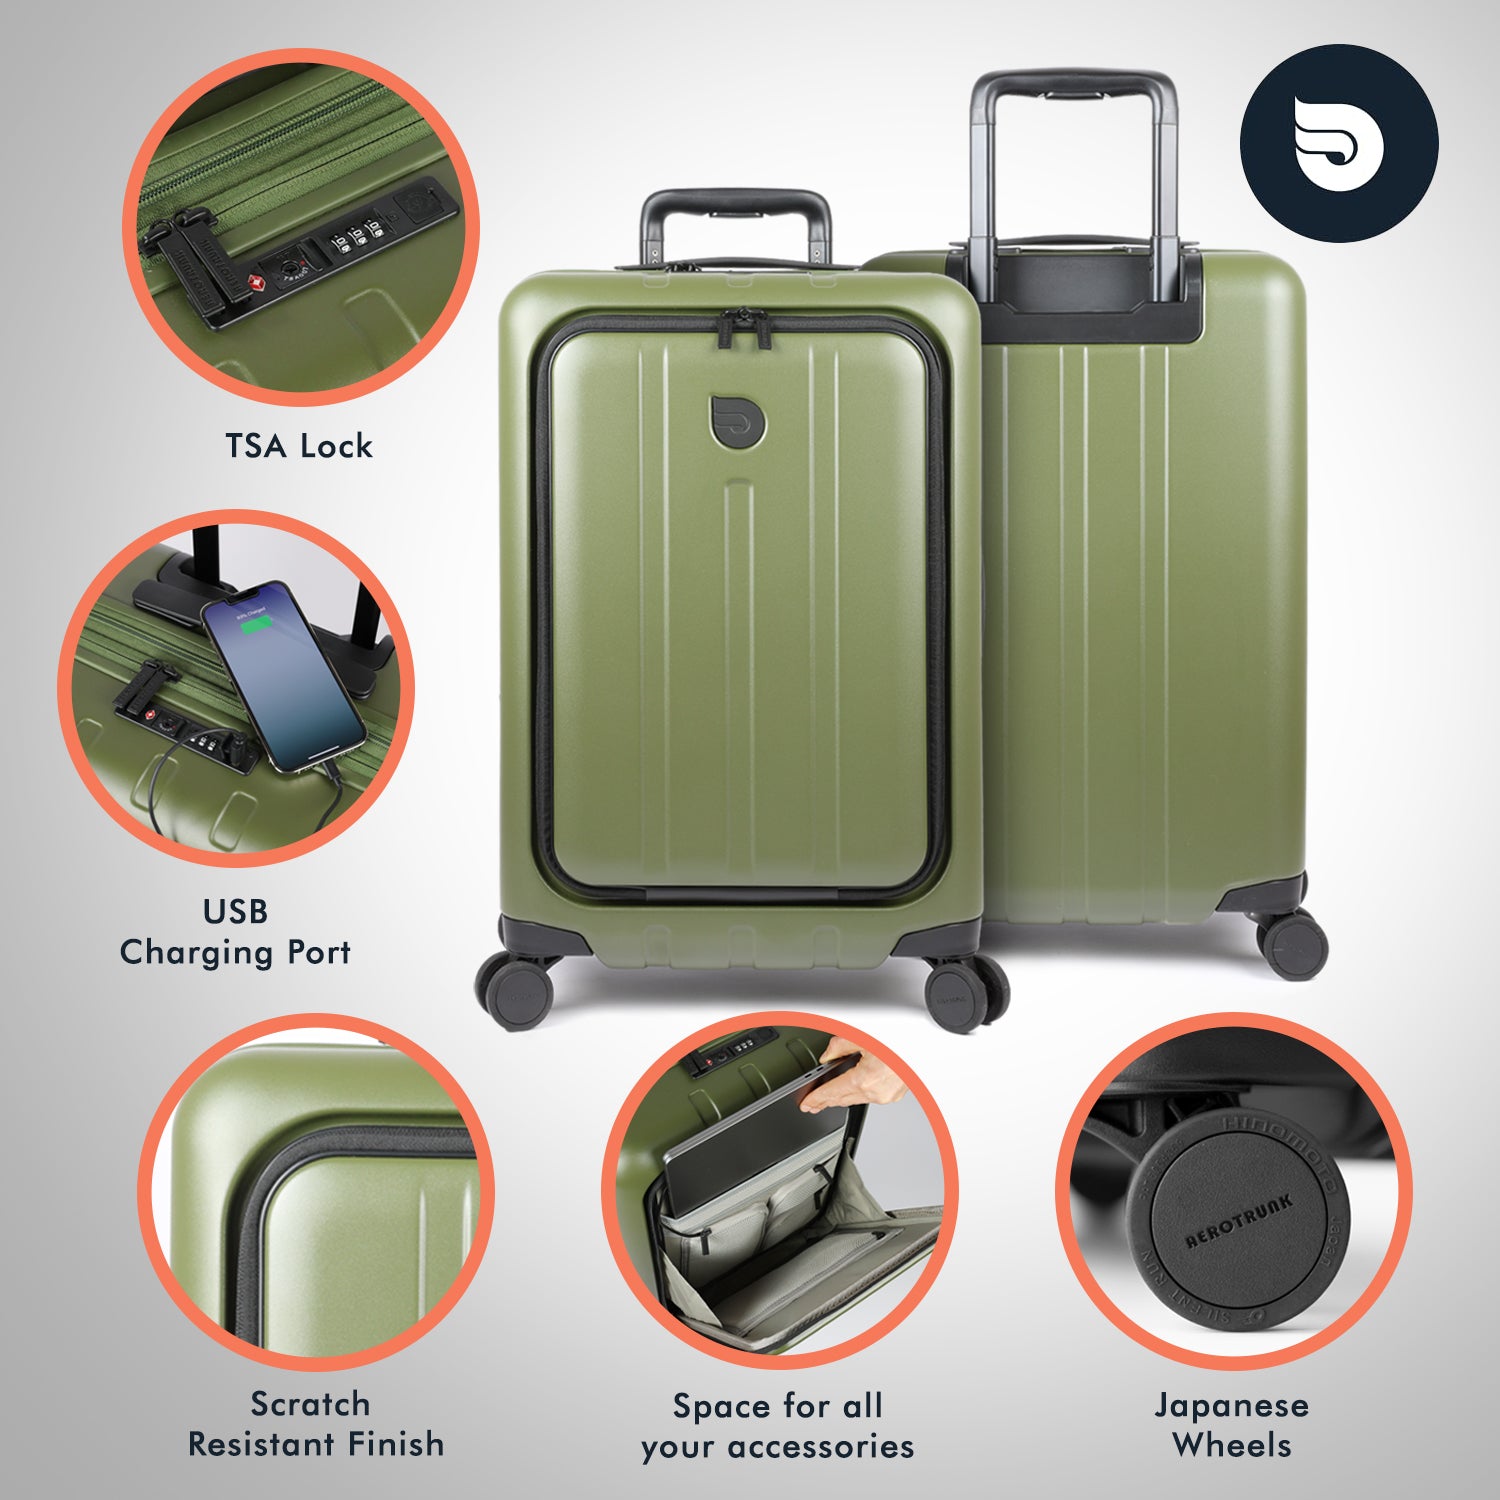 Aerotrunk Digital Luggage Scale